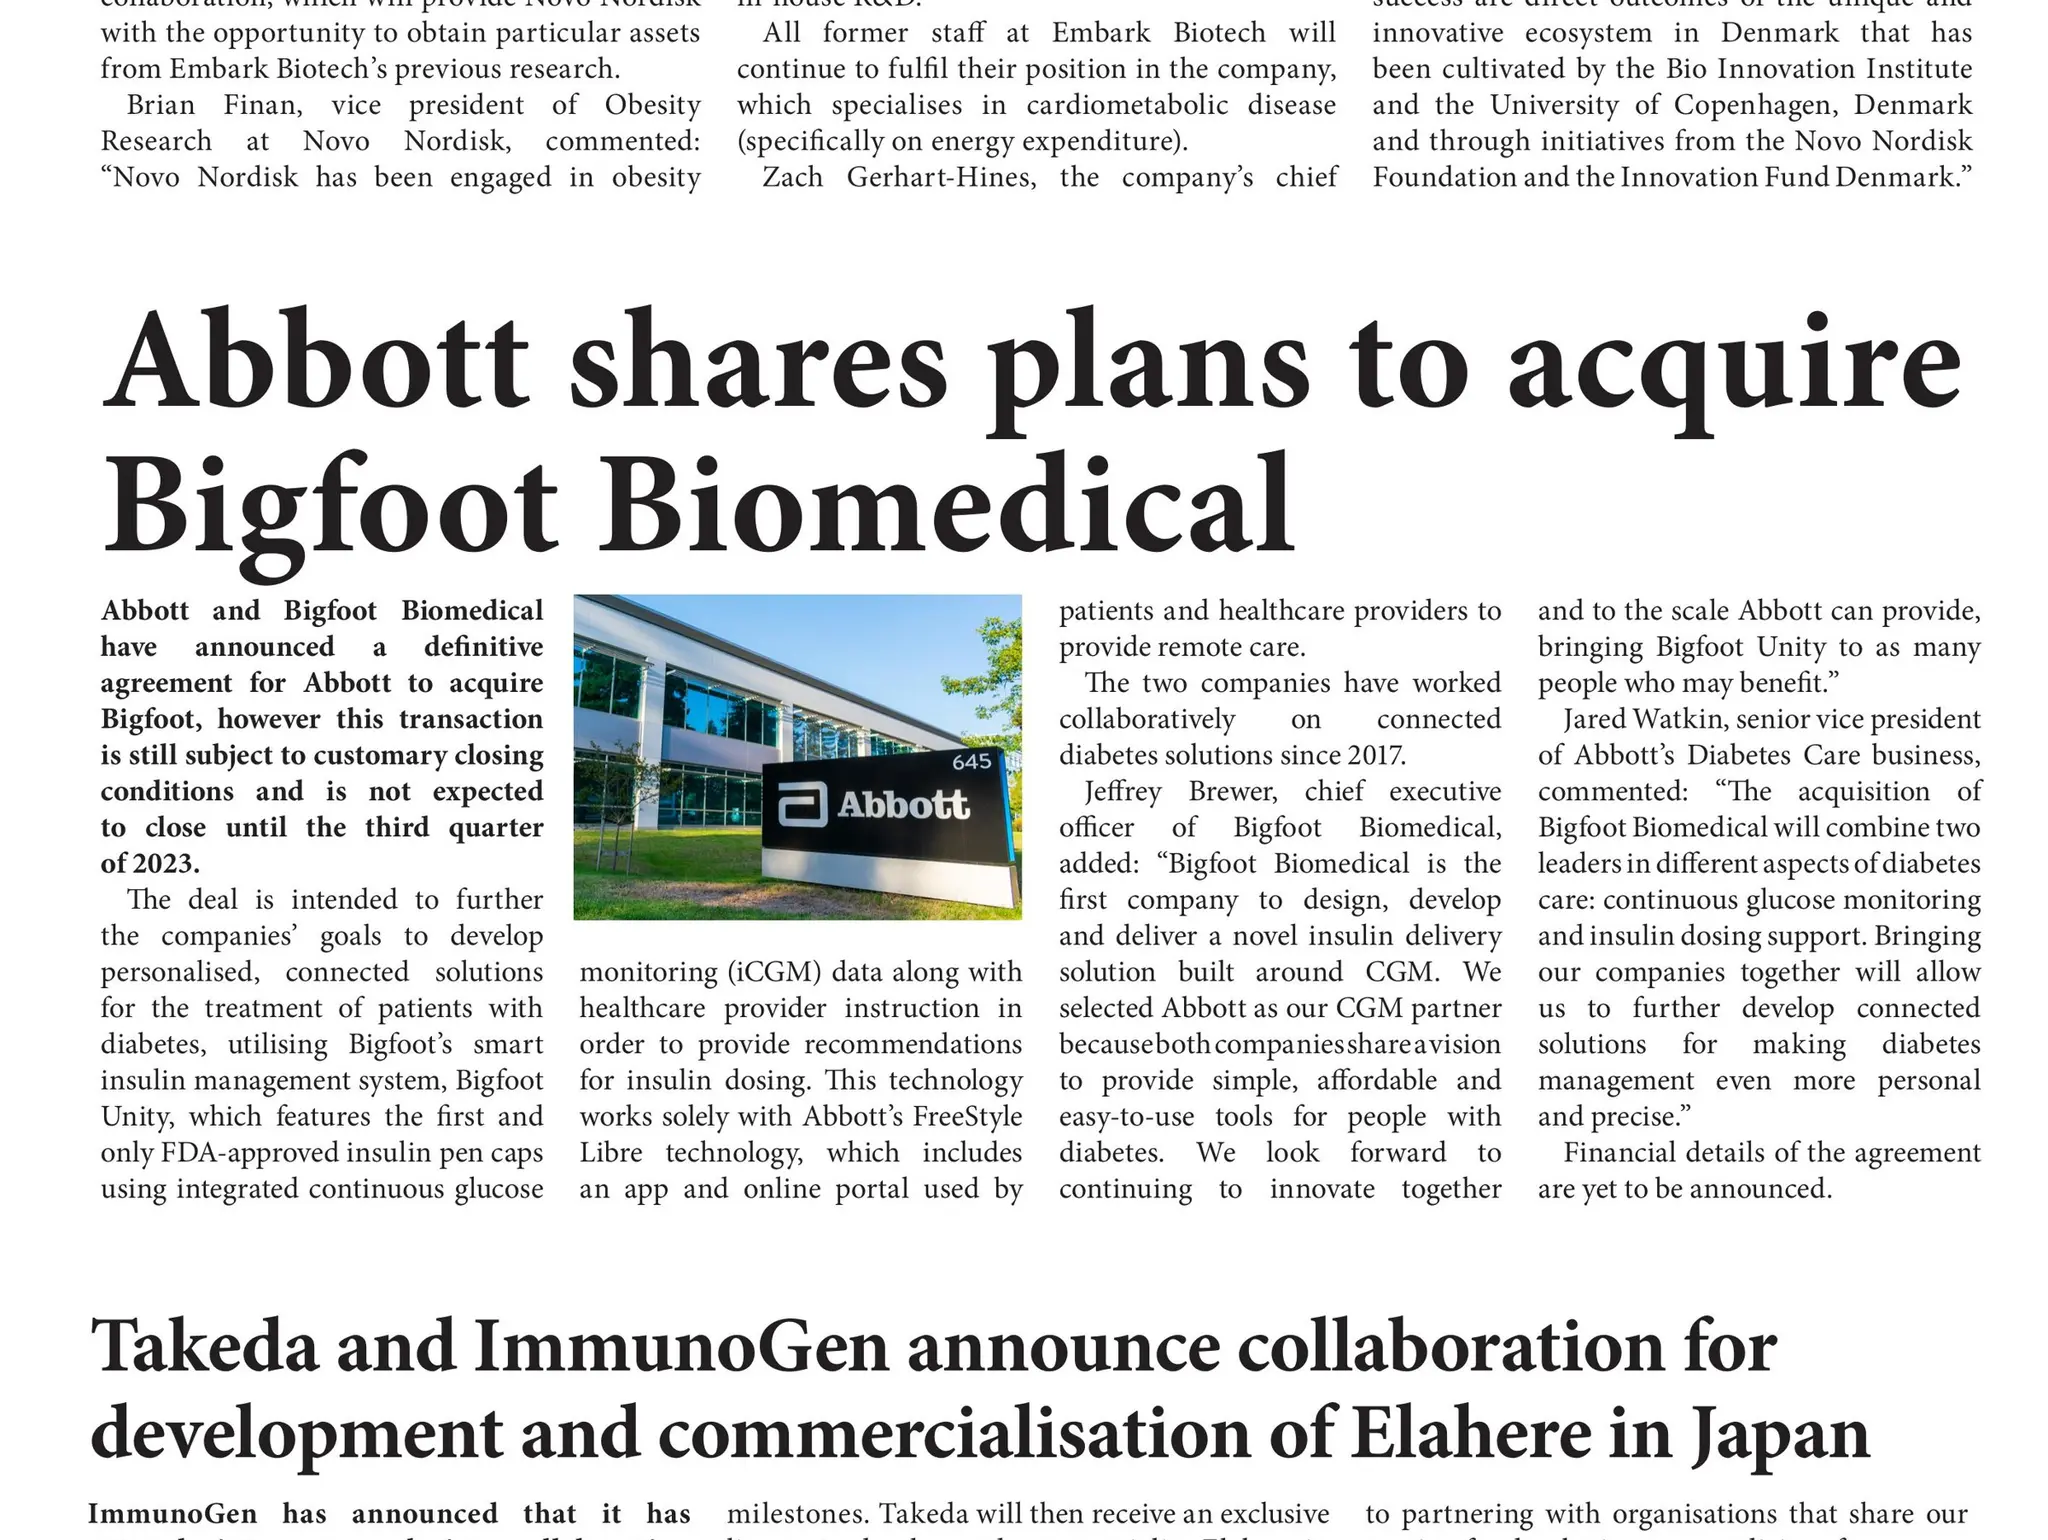 Takeda & ImmunoGen announce collaboration for development and commercialisation of Elahere in Japan